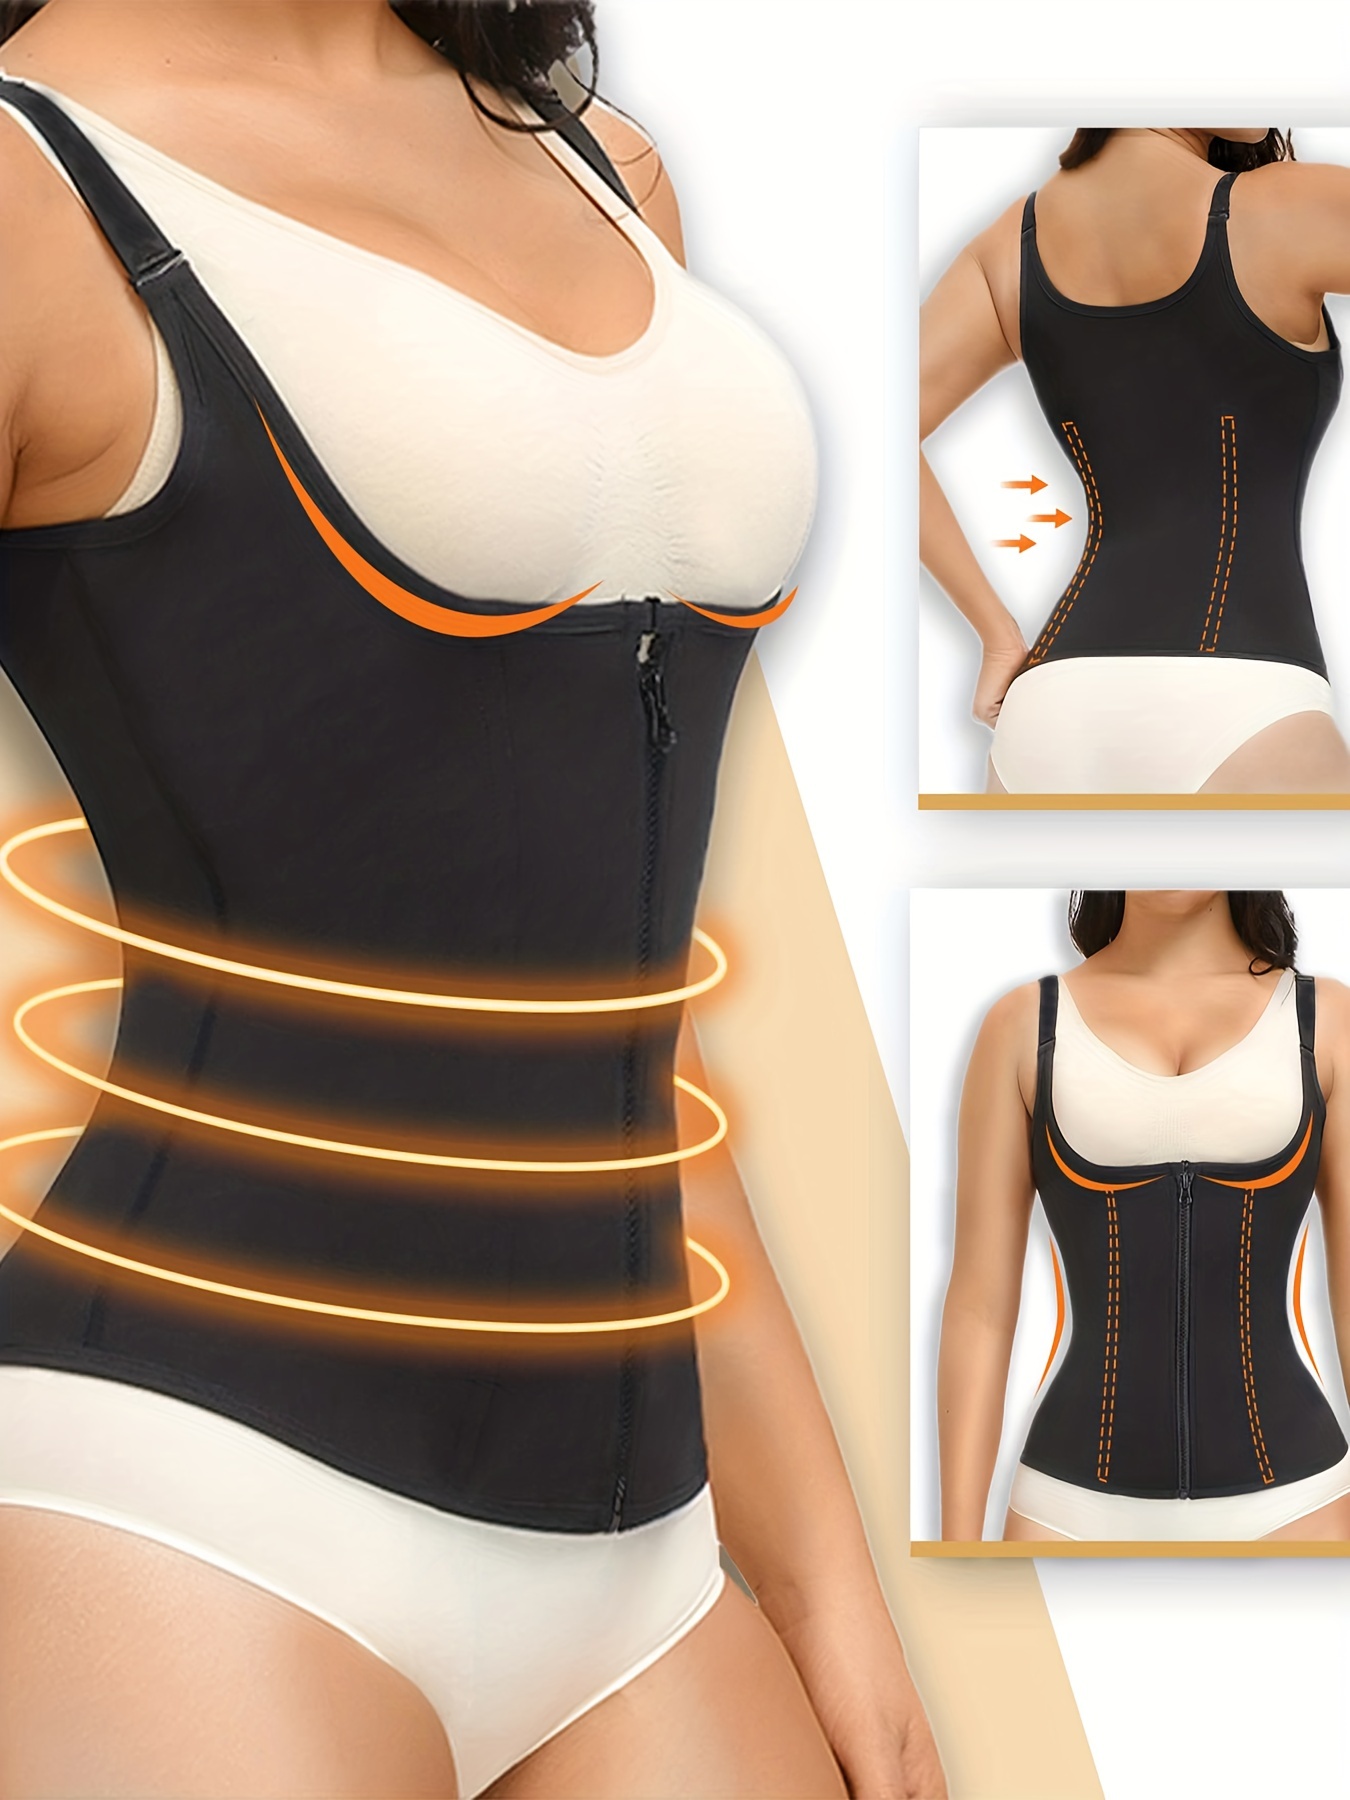 MiiOW Waist Trainer Corset Women Binders Shaper Tummy Wrap Body